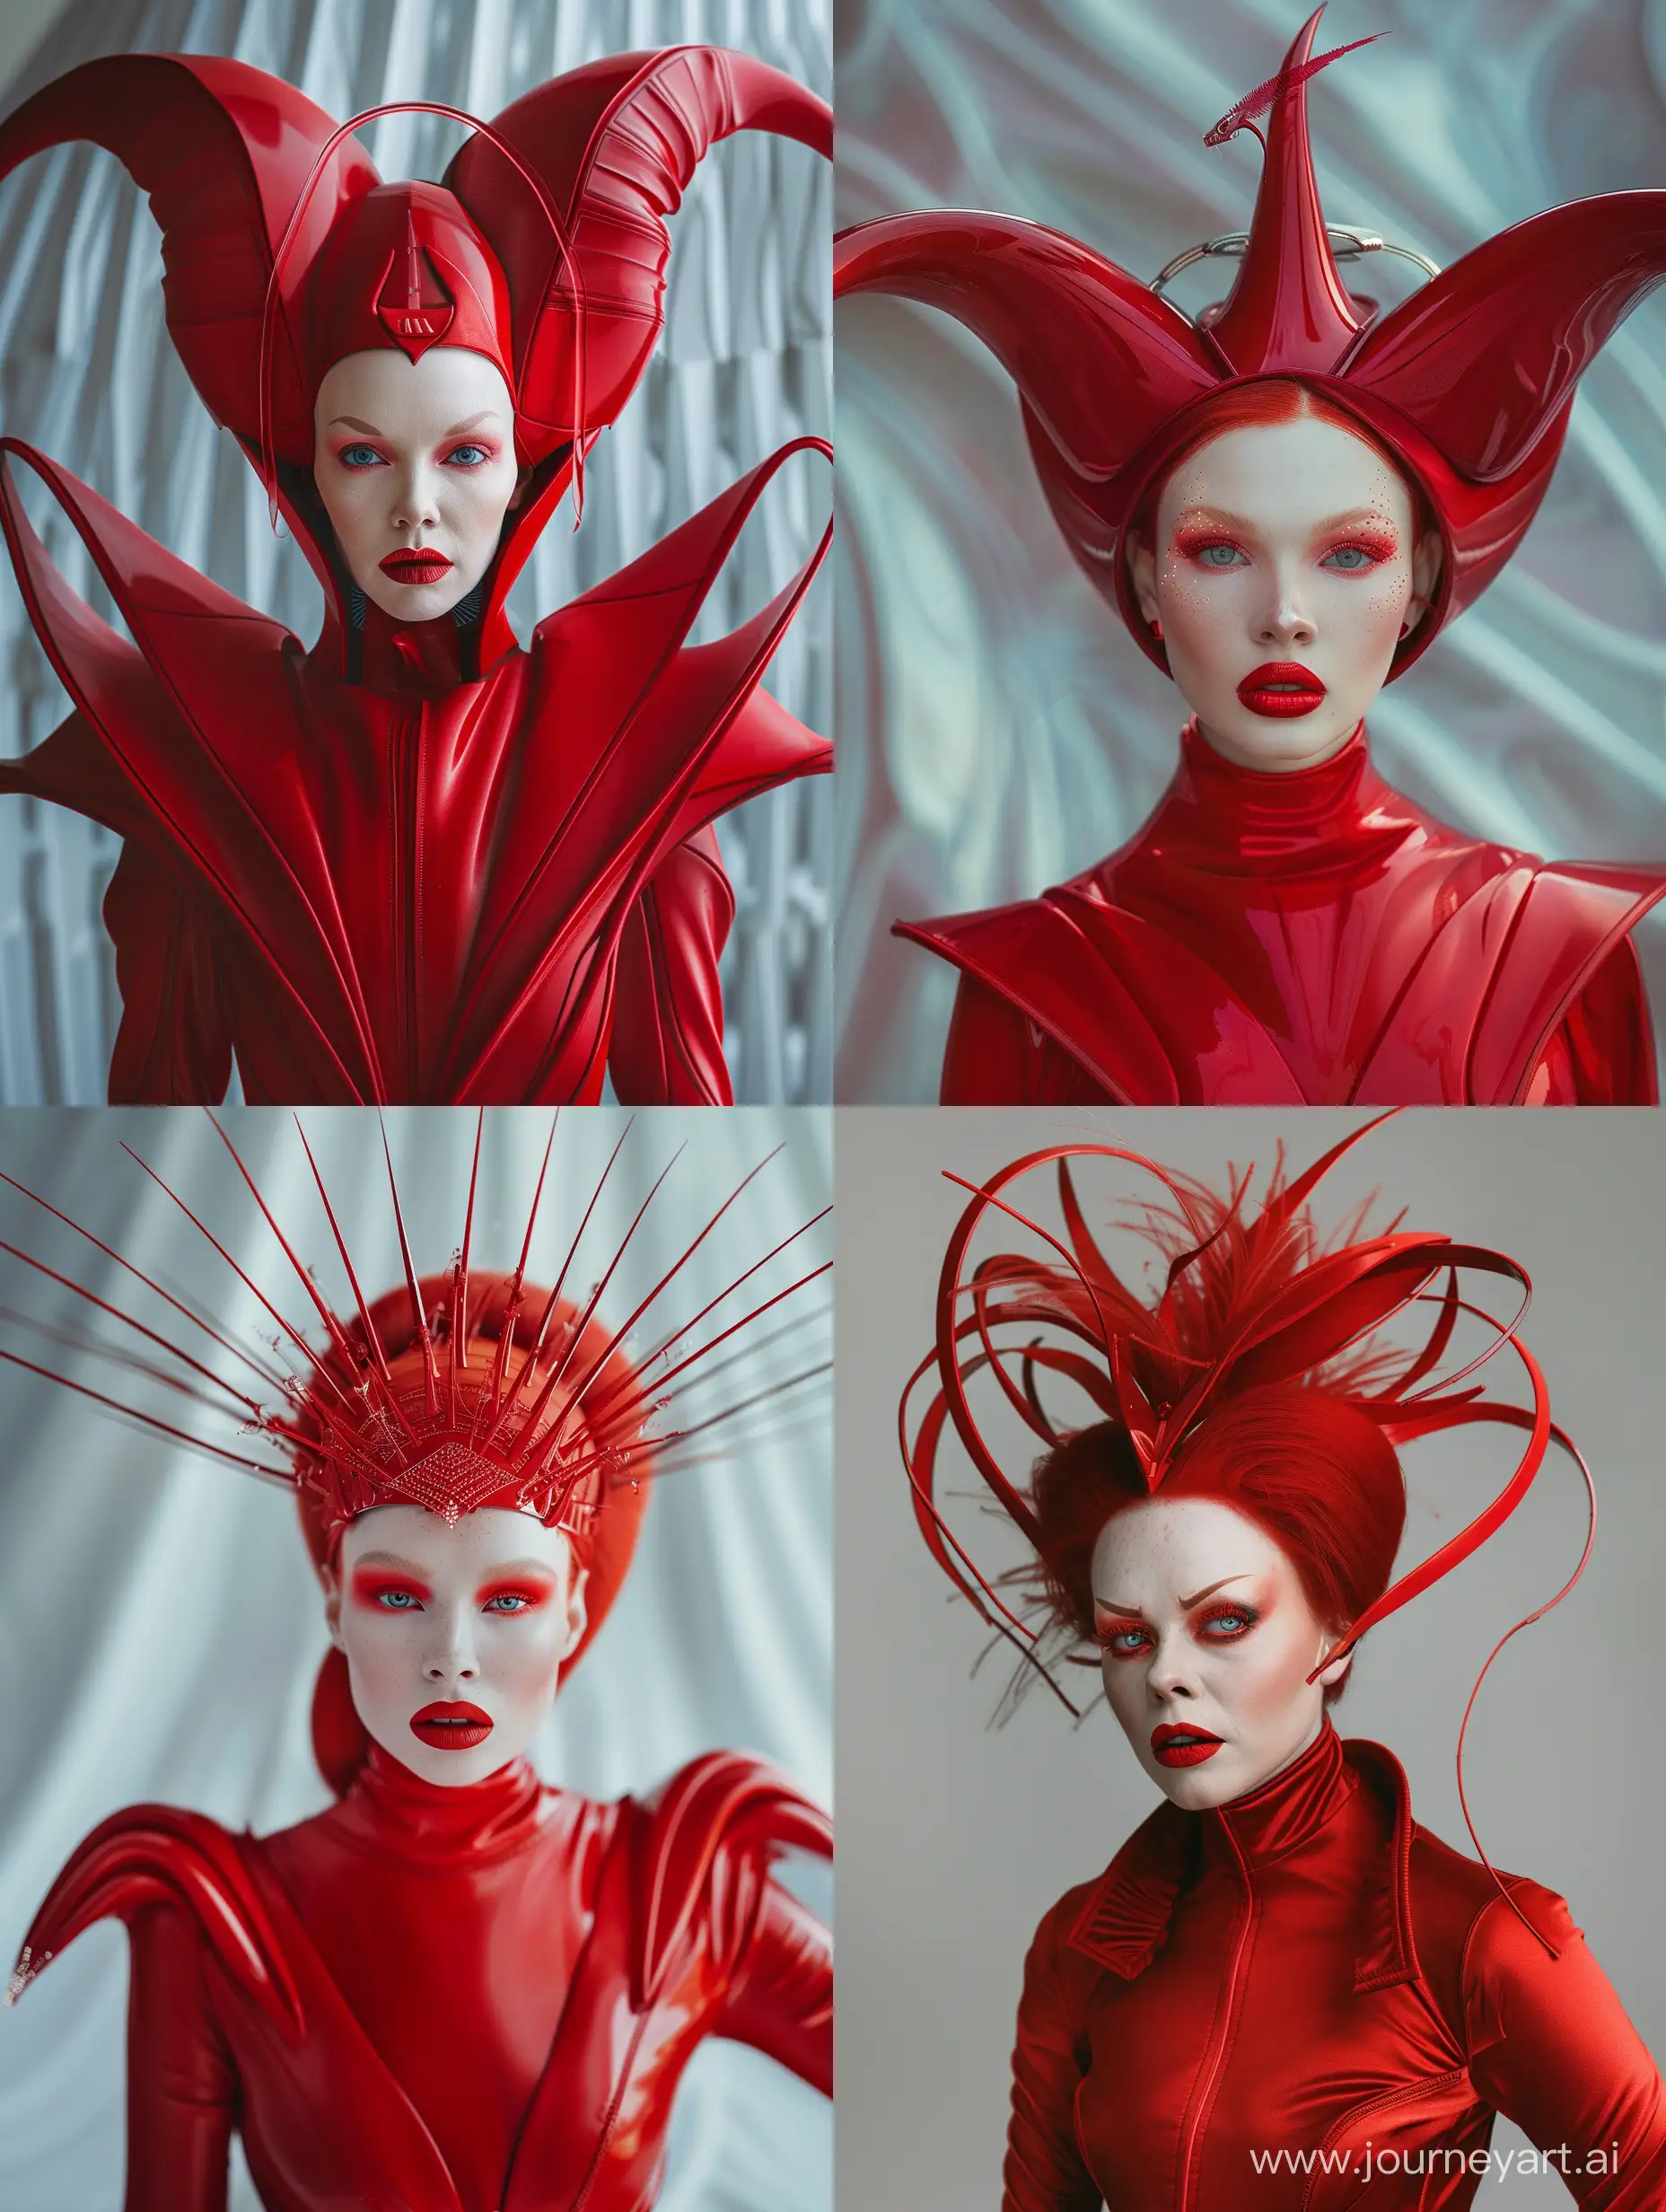 Futuristic-Redhead-Pop-Artist-in-Regal-Themed-Outfit-Vivid-Fantasy-Portrait